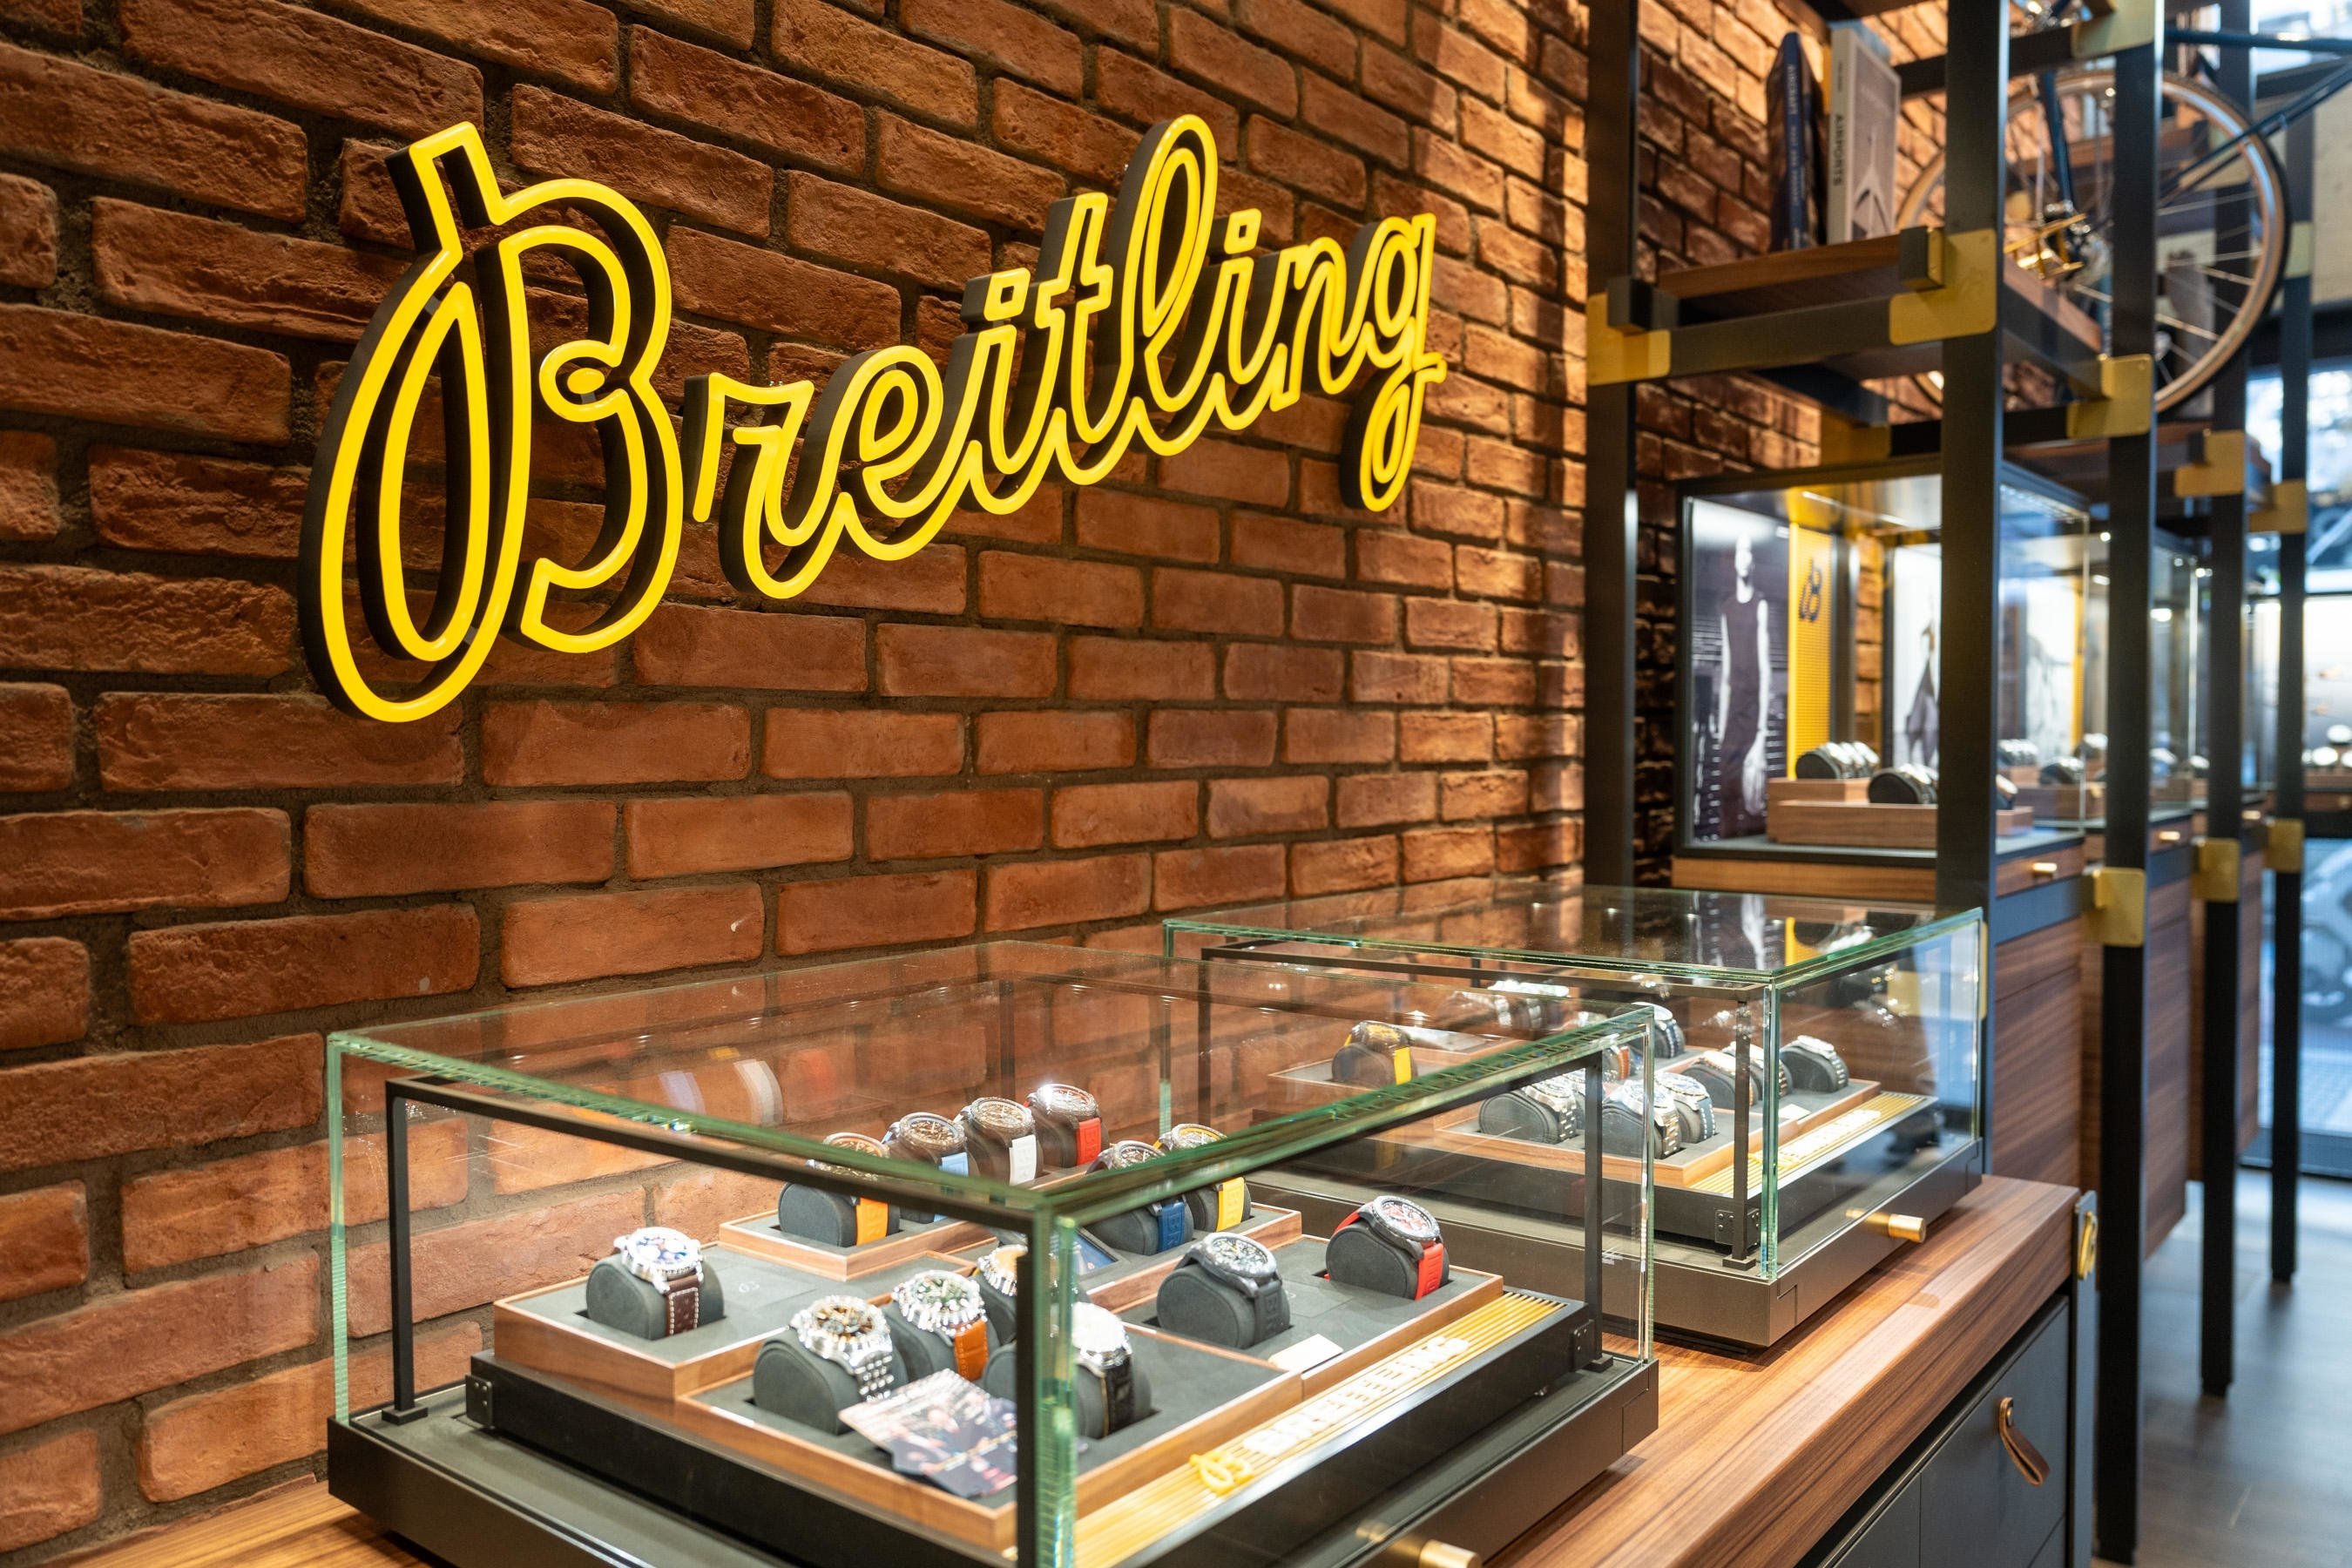 Breitling Boutique Thessaloniki